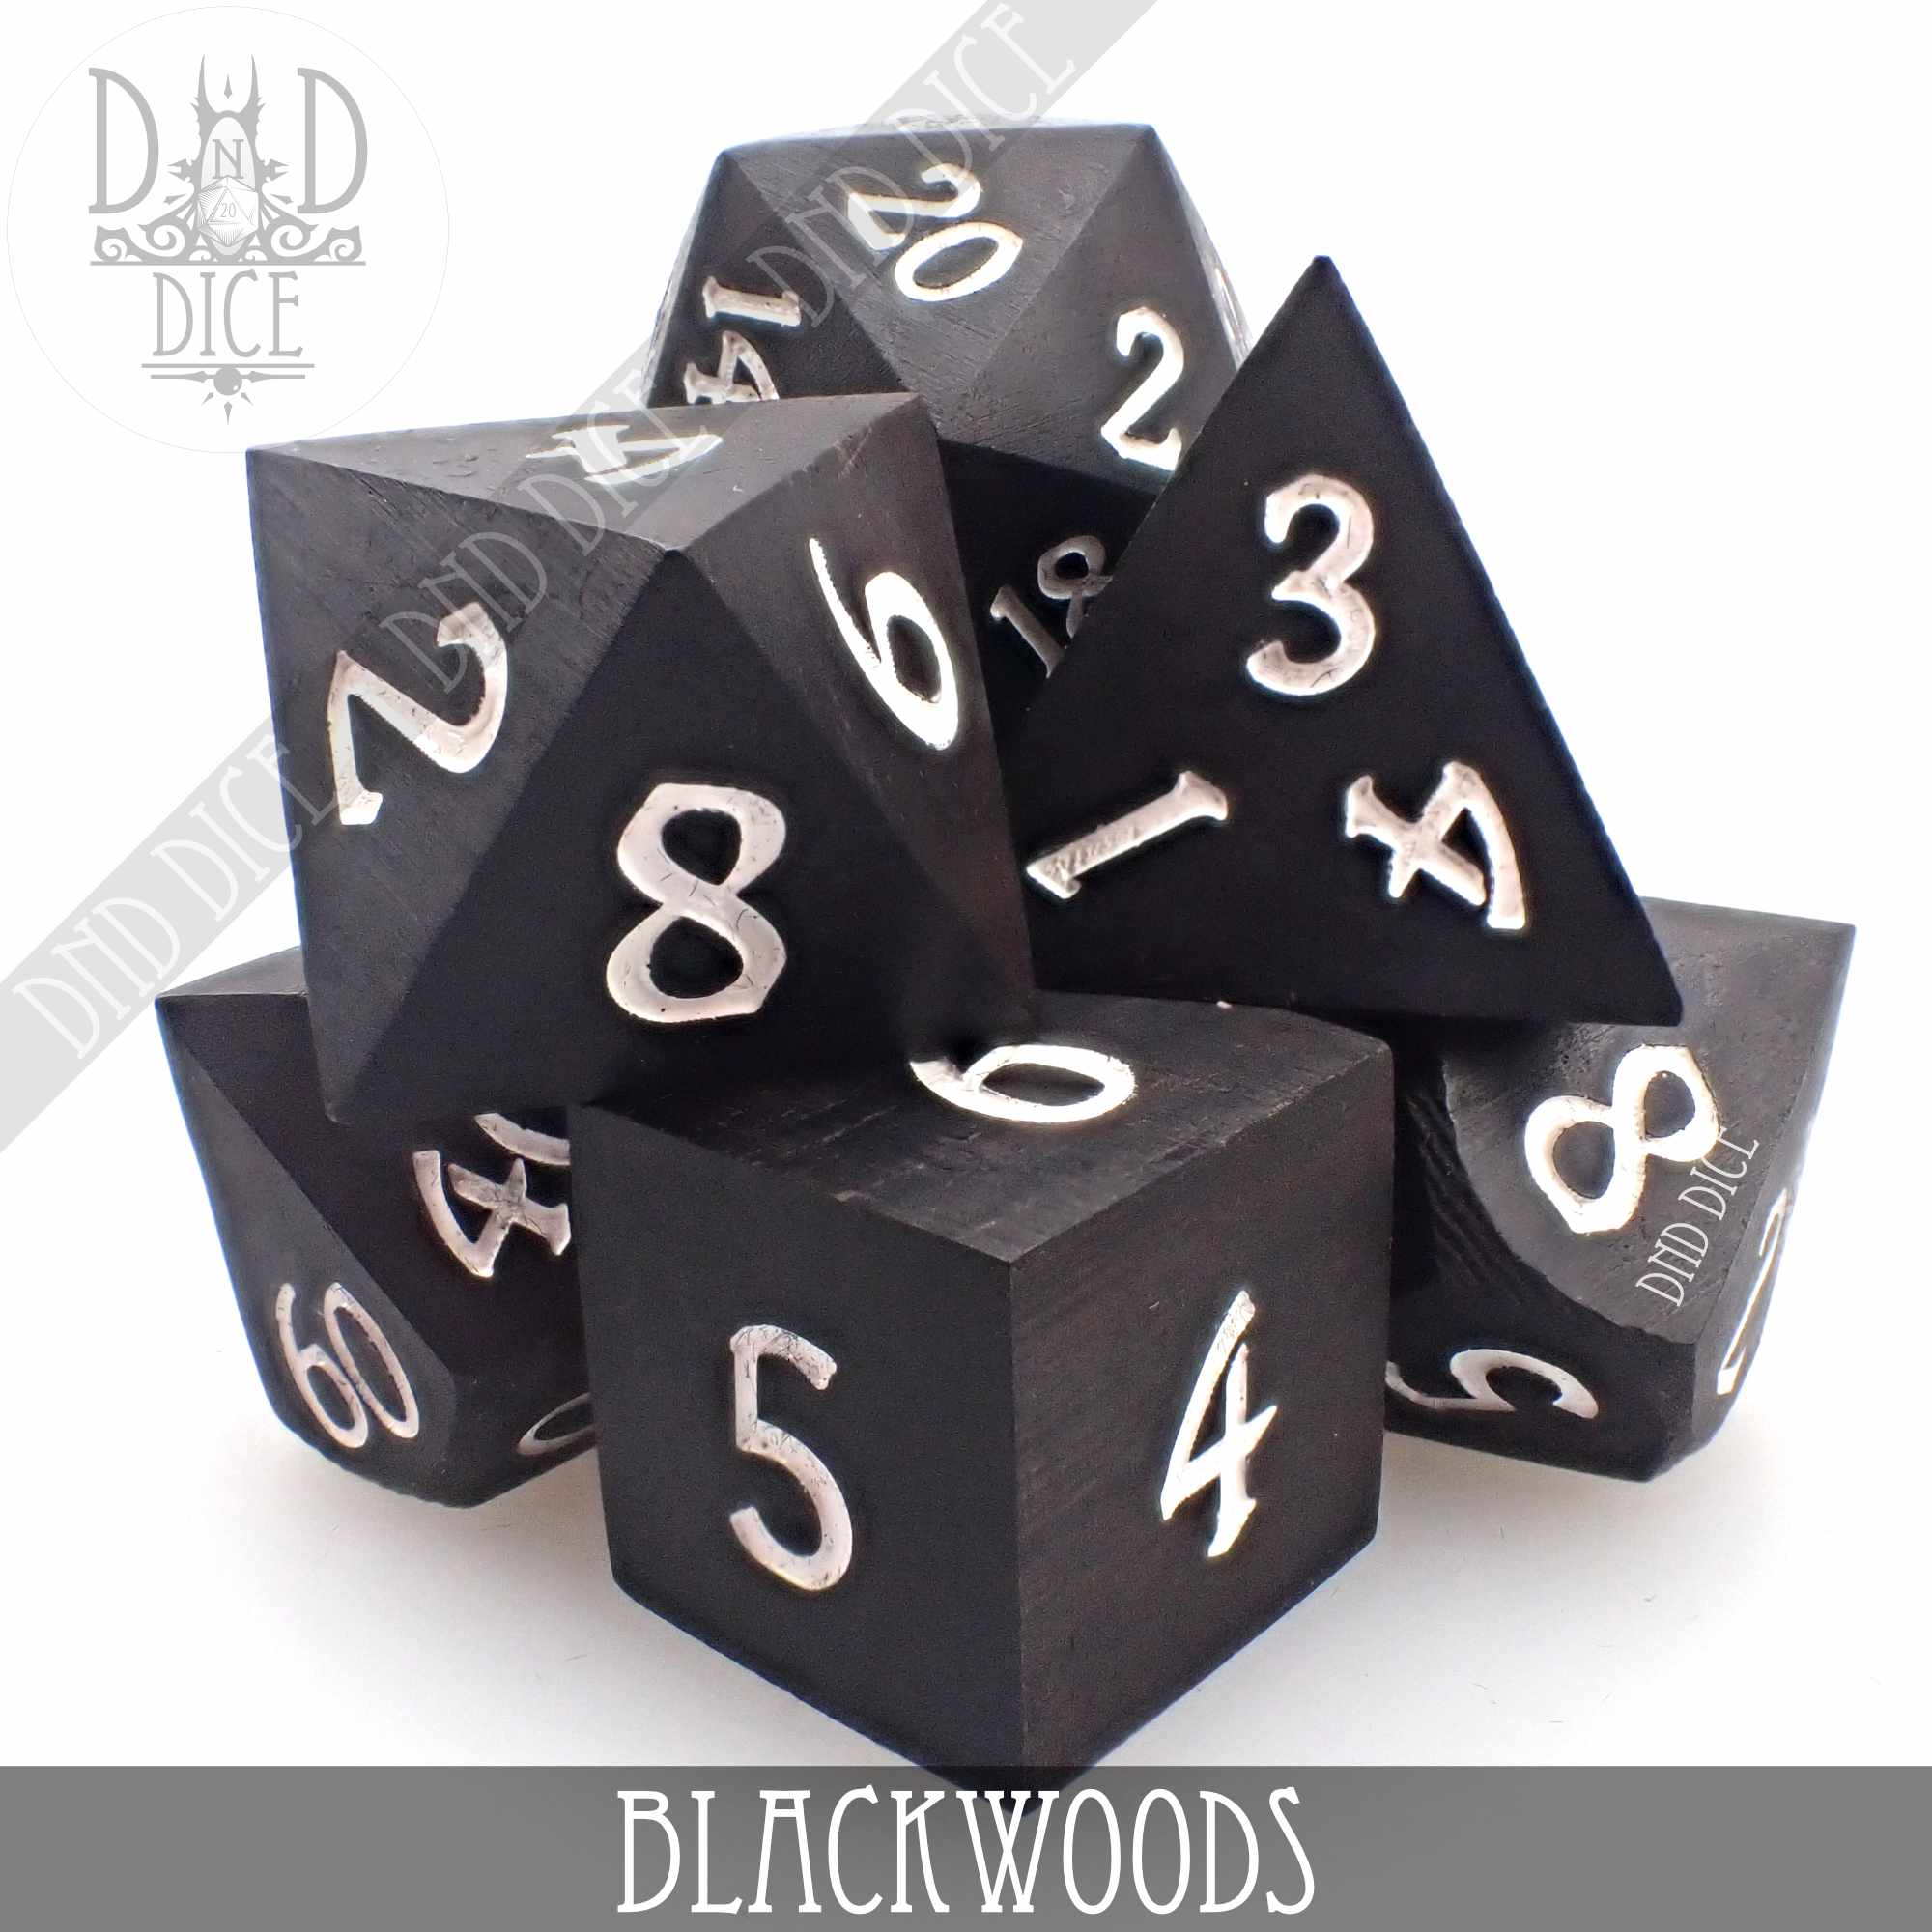 Blackwoods - Wood (Gift Box)